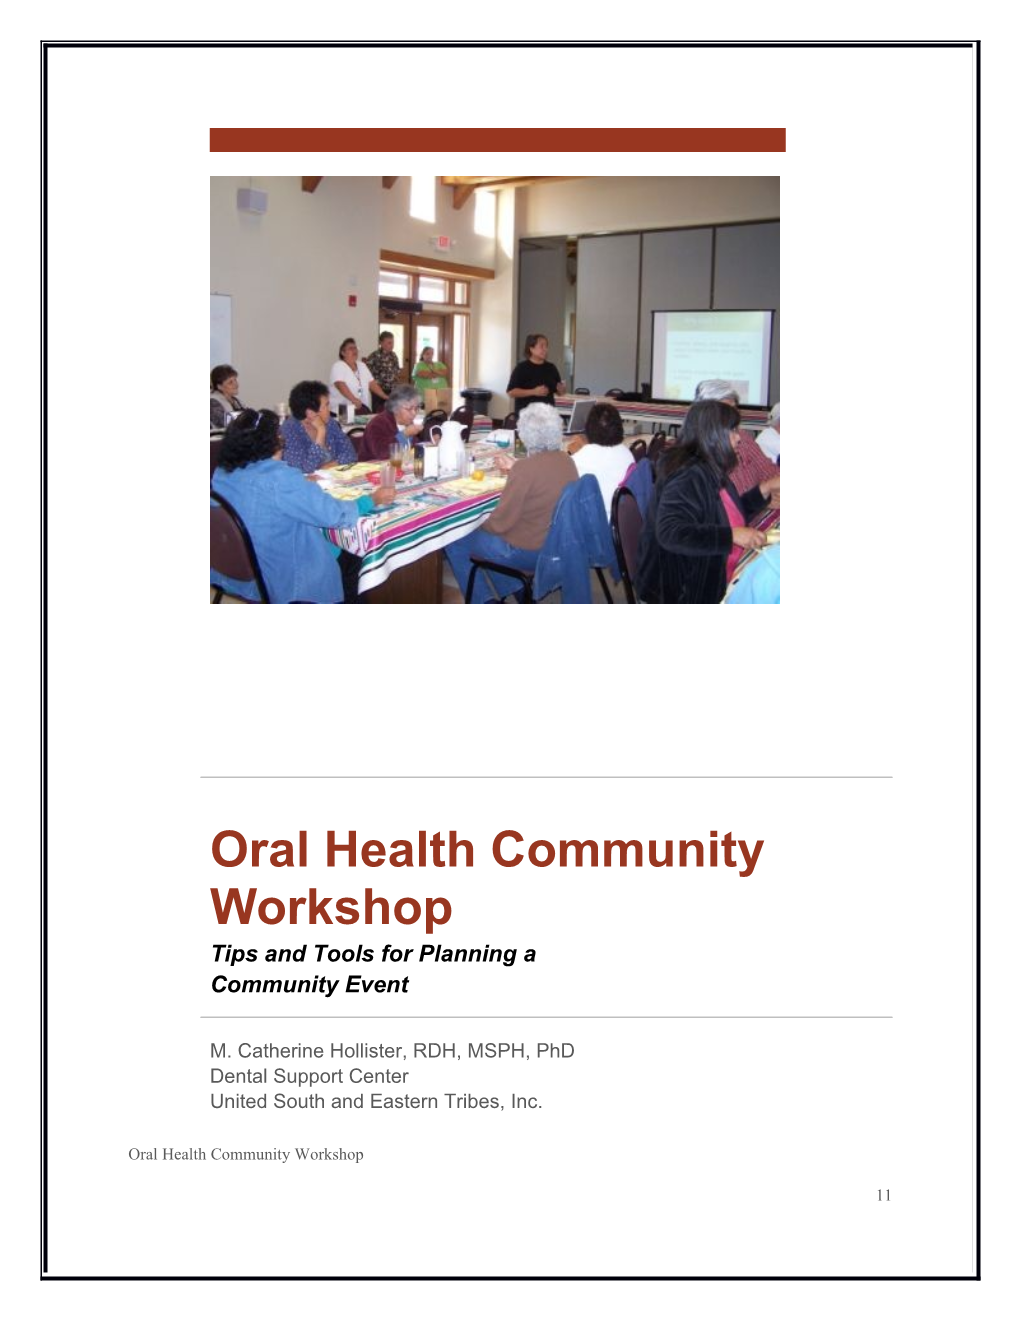 Oral Health Community Workshop